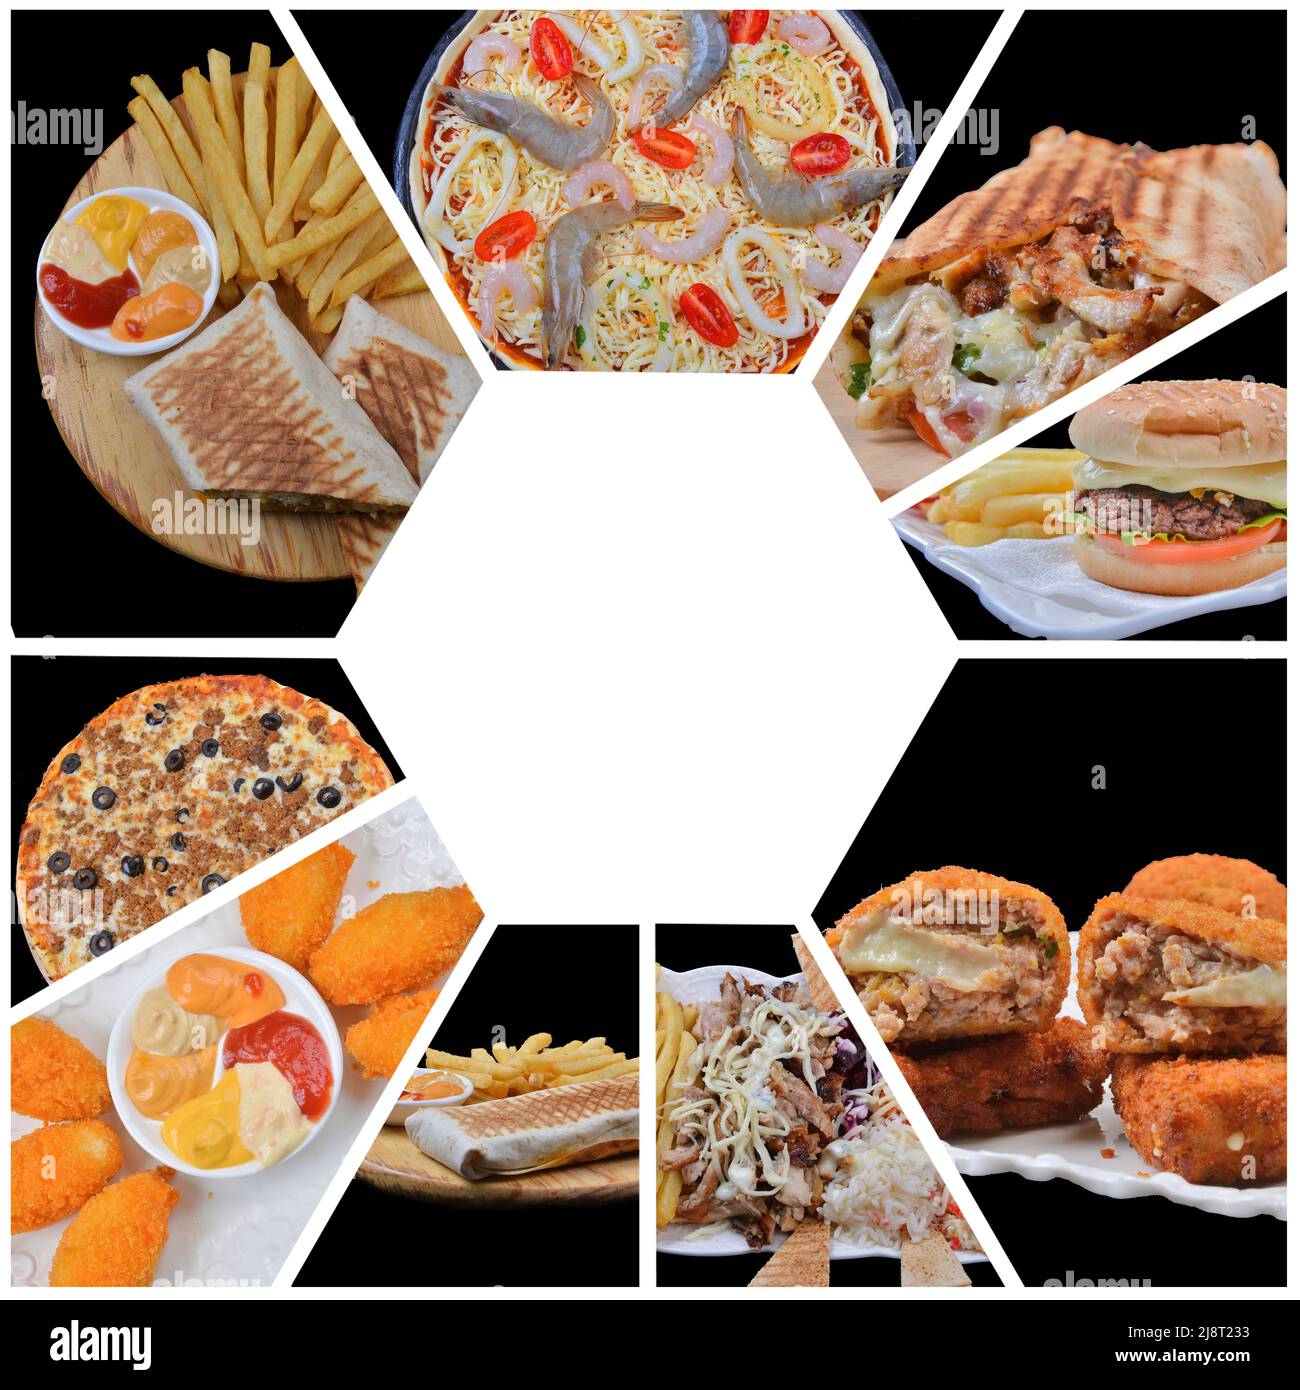 Collage de comida chatarra fotografías e imágenes de alta resolución - Alamy